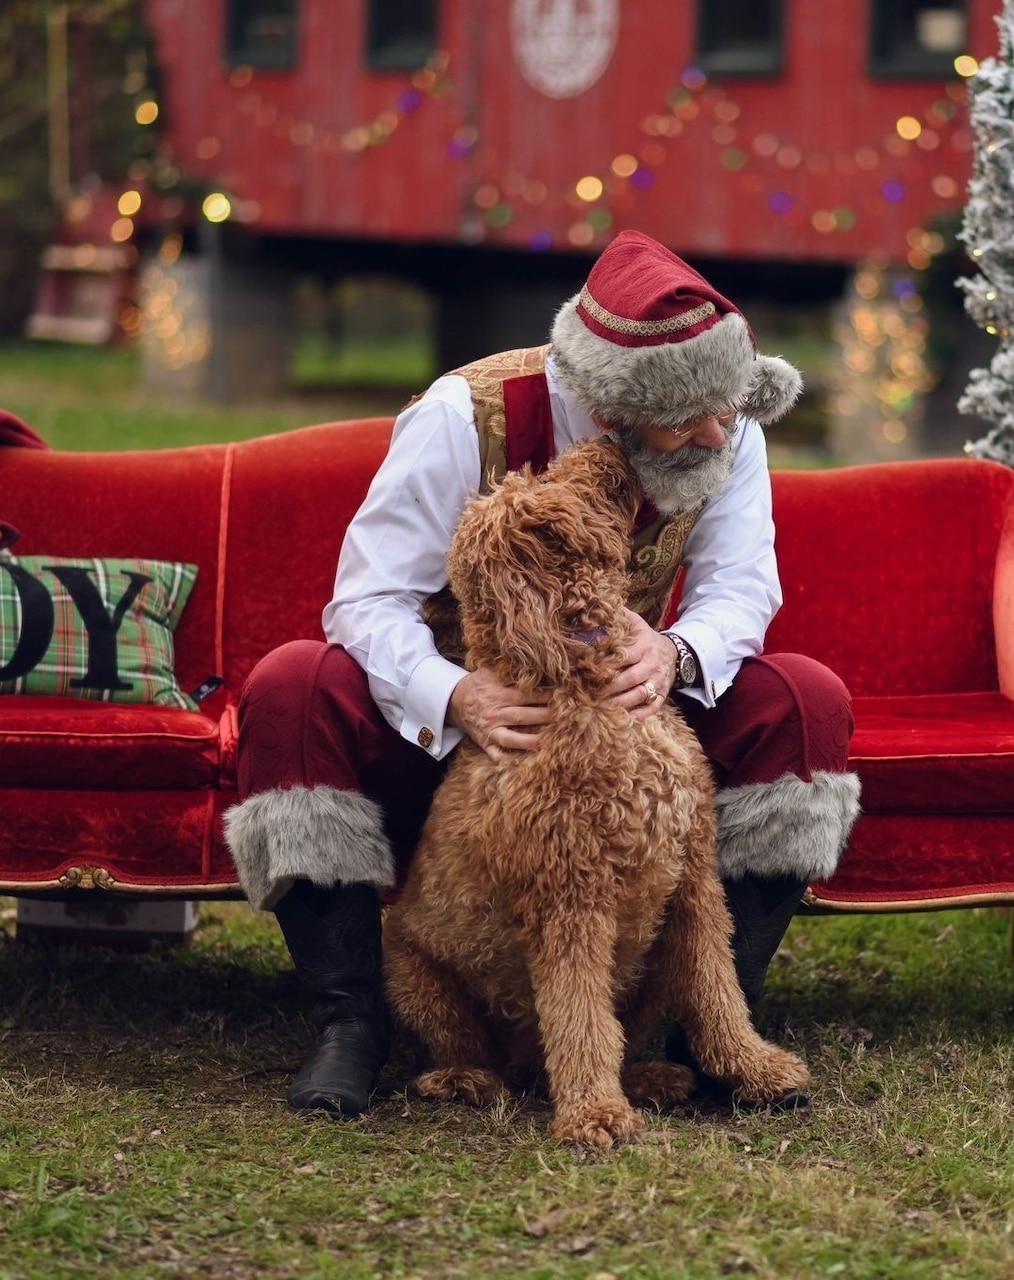 Santa plays with a dog.